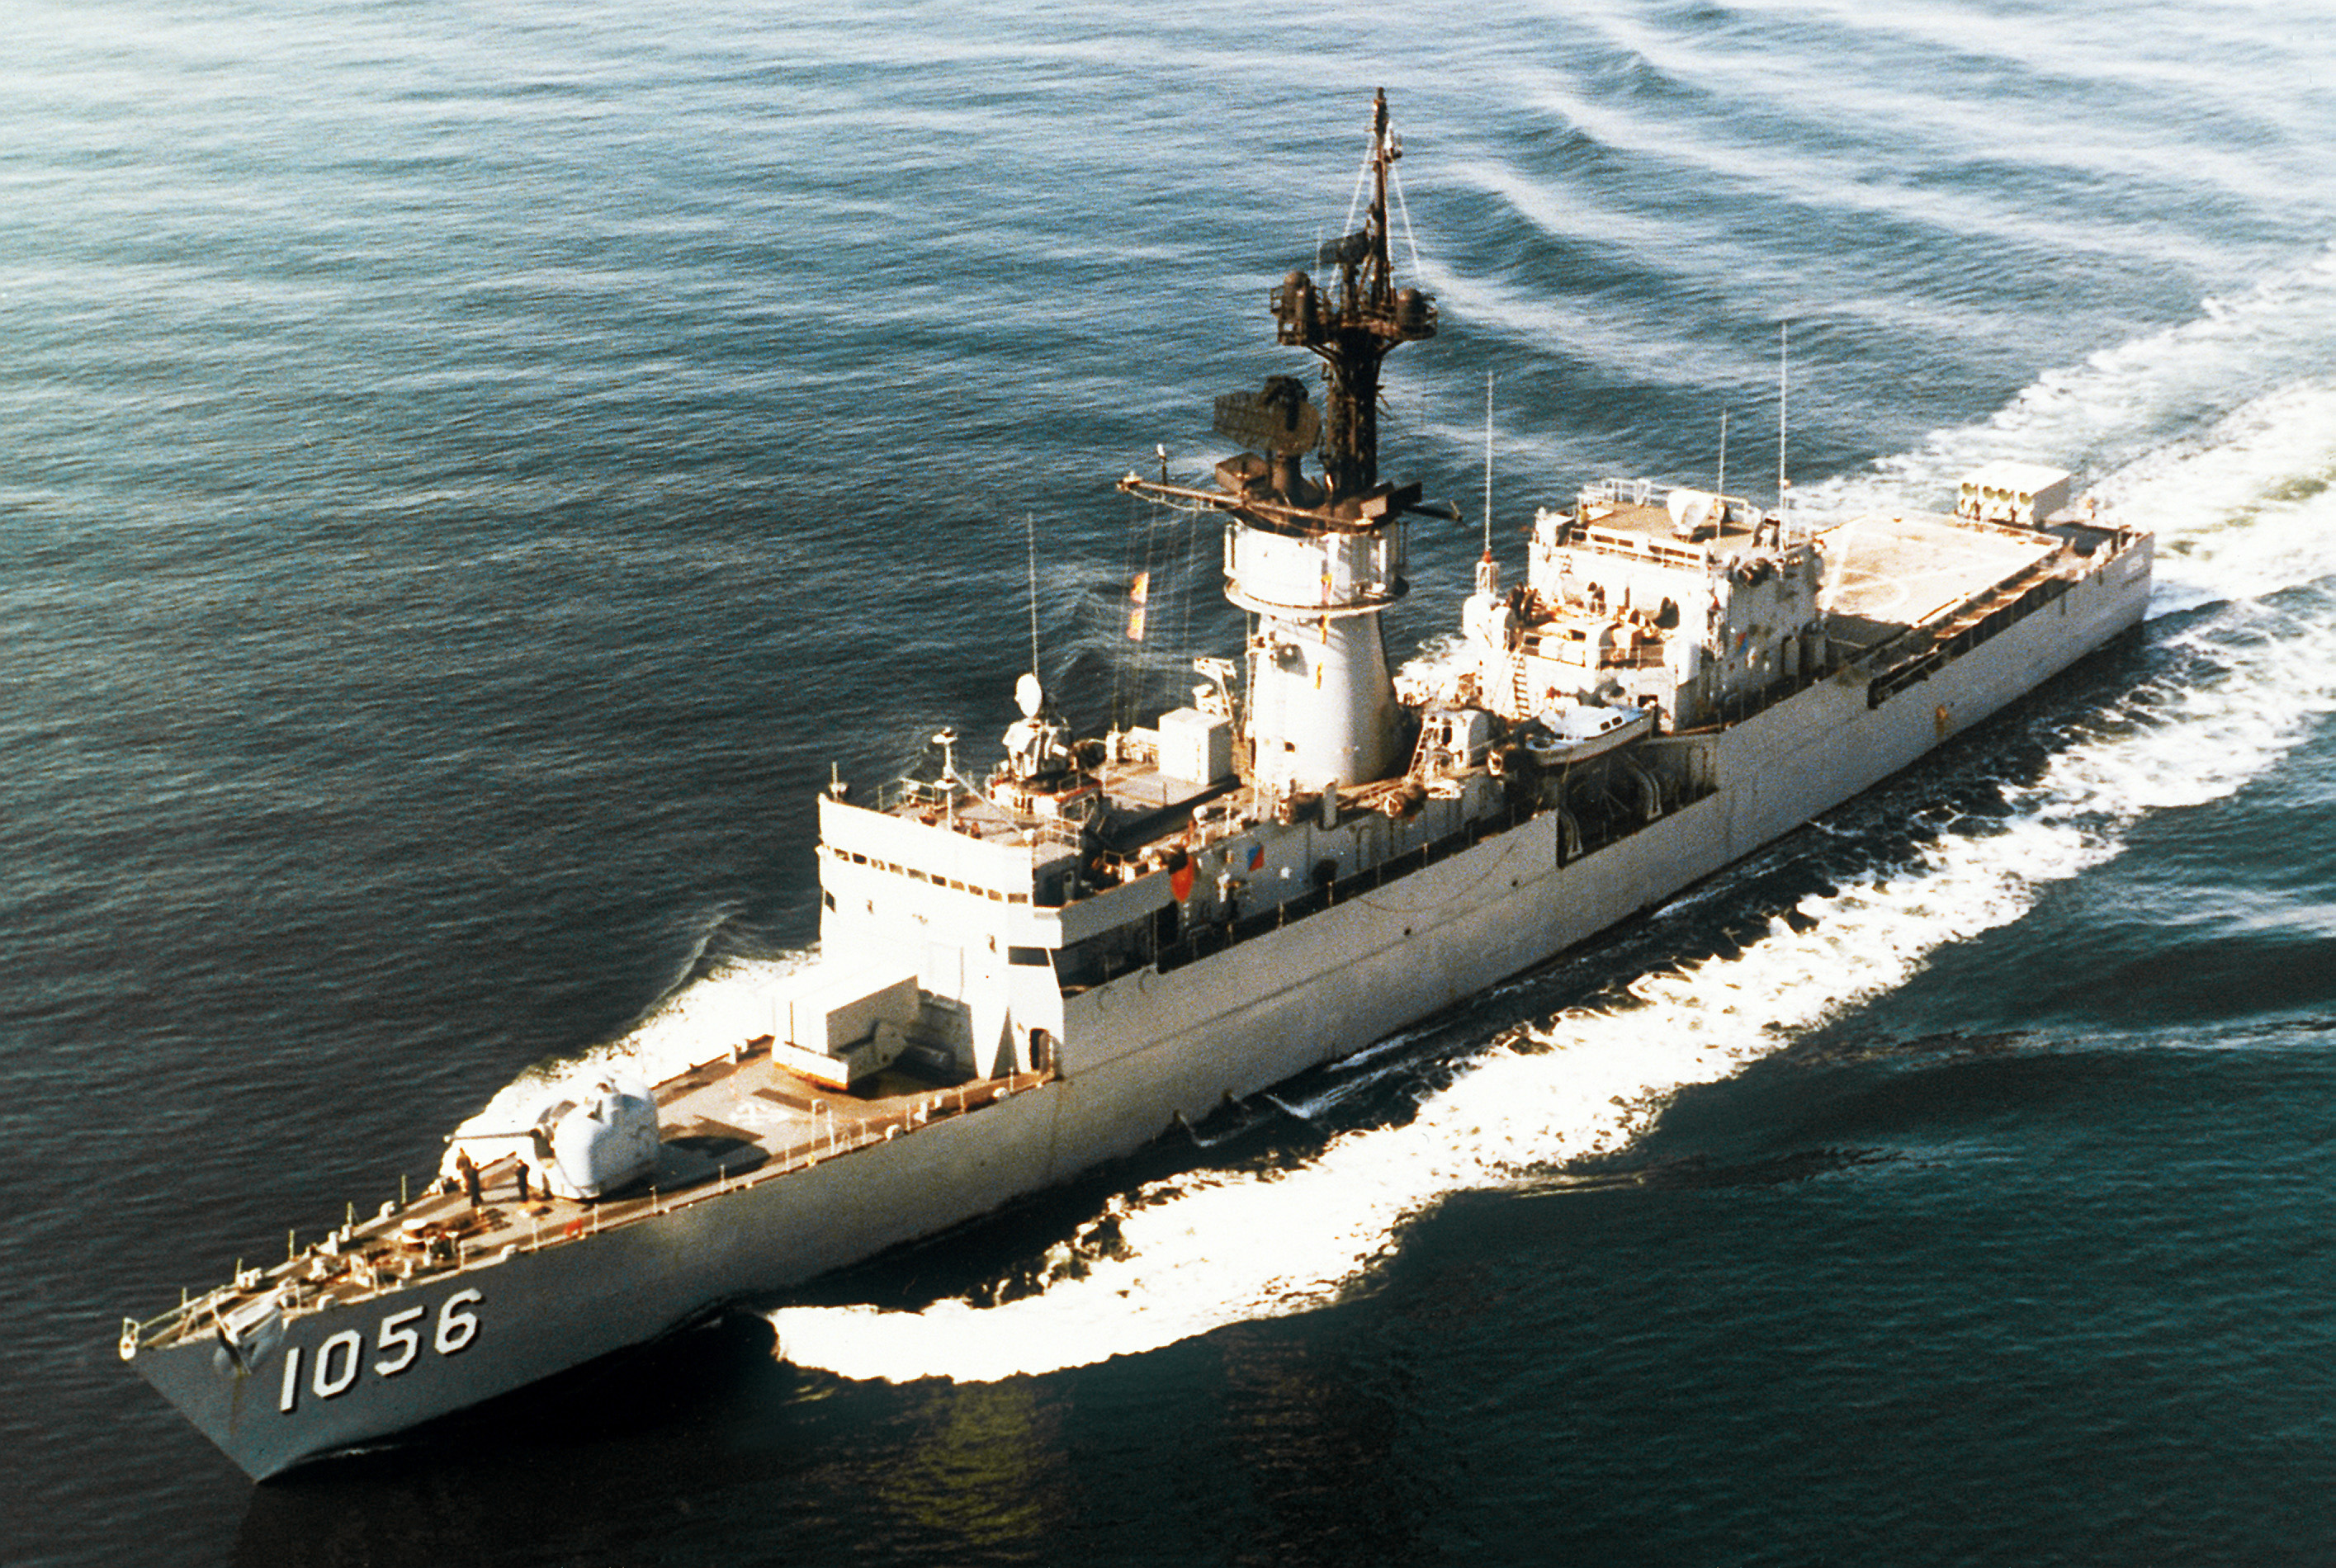 File:USS Connole Atlantic (6392228).jpg Wikipedia - September Ocean underway 22 (FF-1056) 1984 in the on